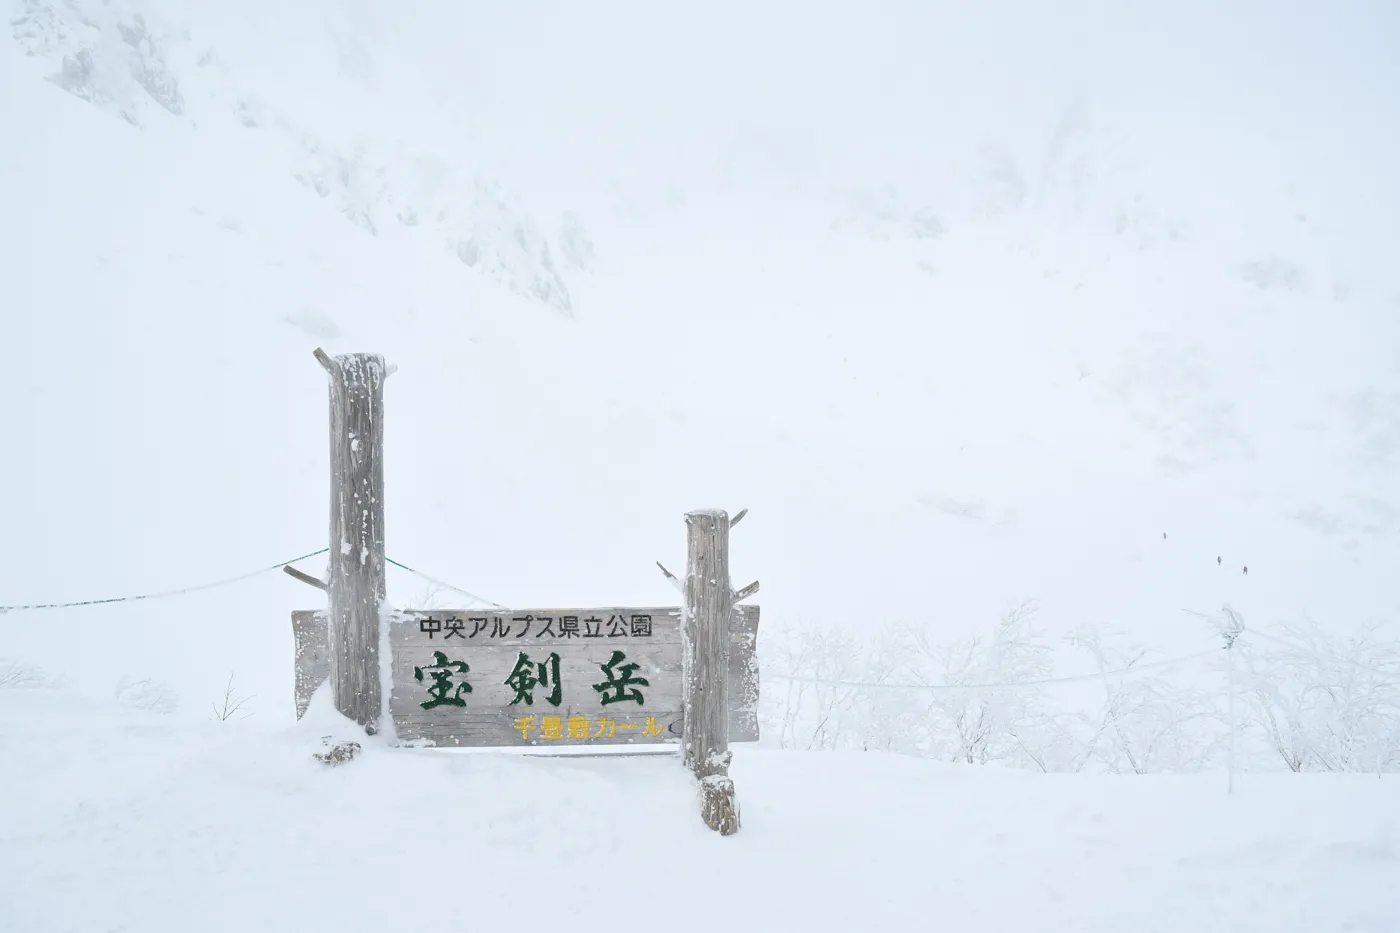 木曽駒ヶ岳 初日の出登山 2018